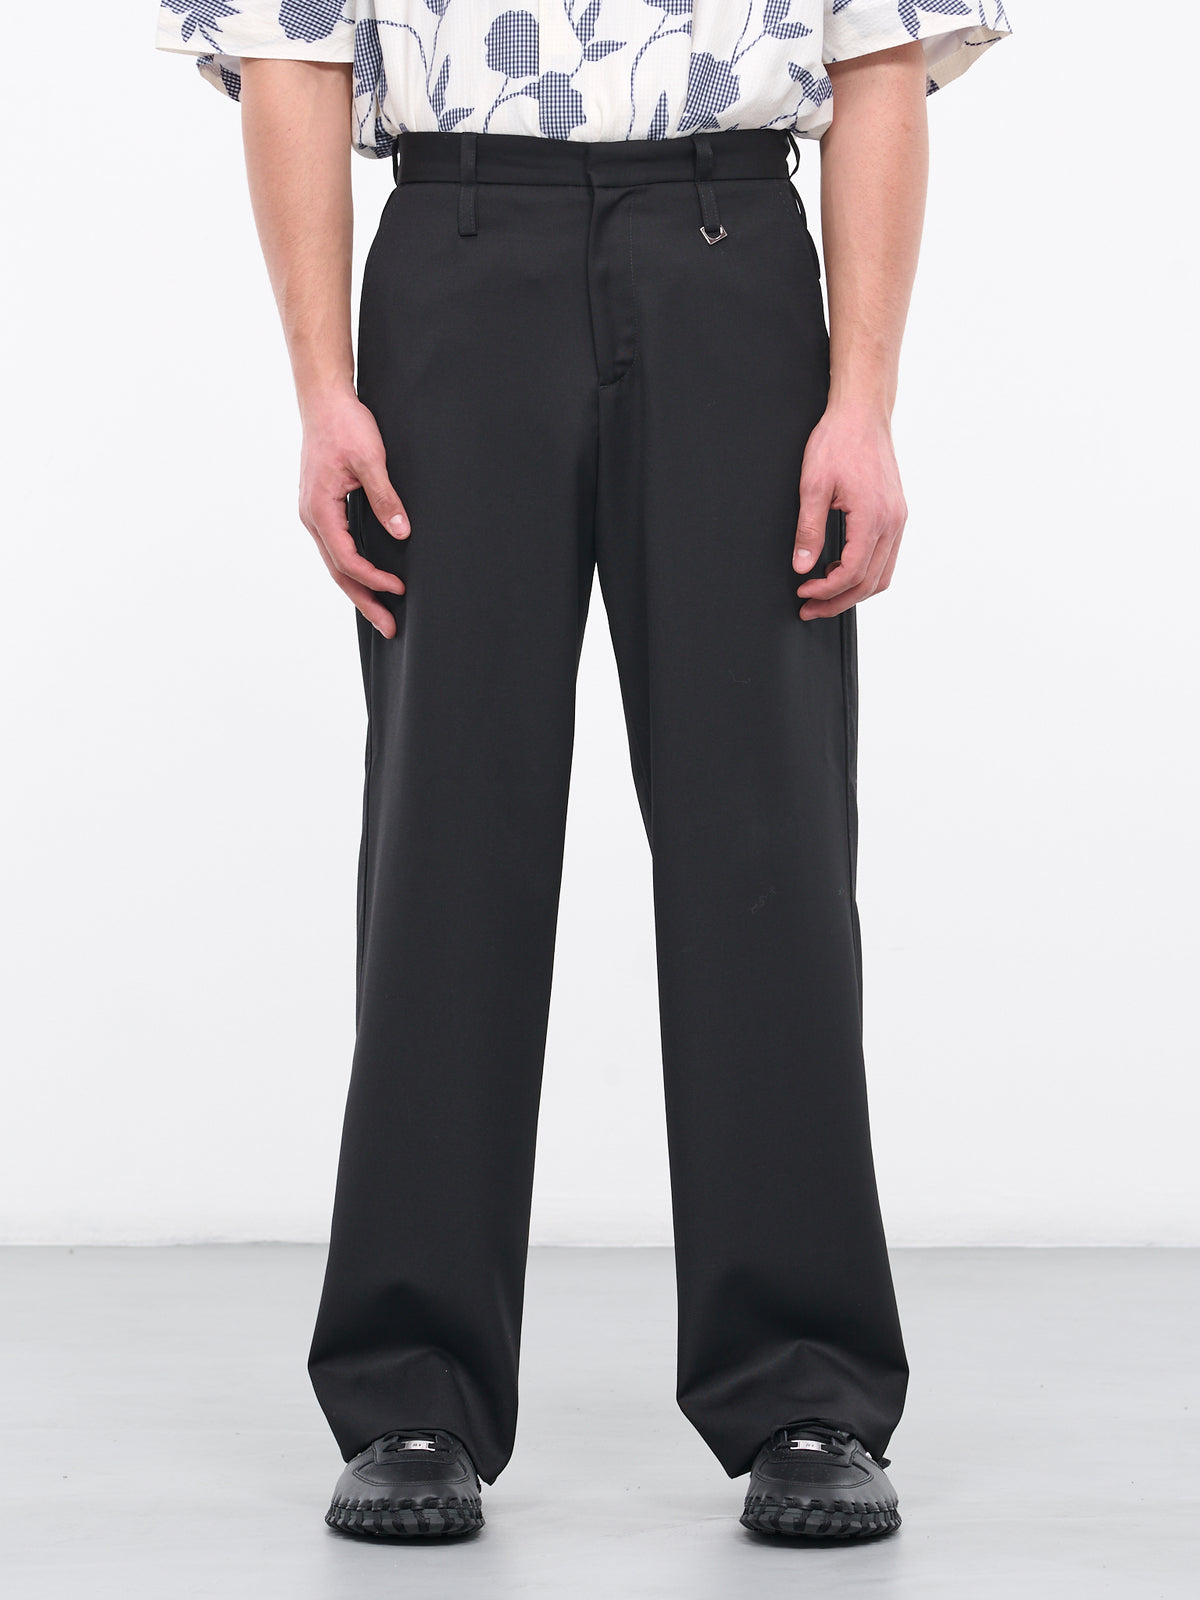 Le pantalon Piccinni (236PA054-1333-BLACK)